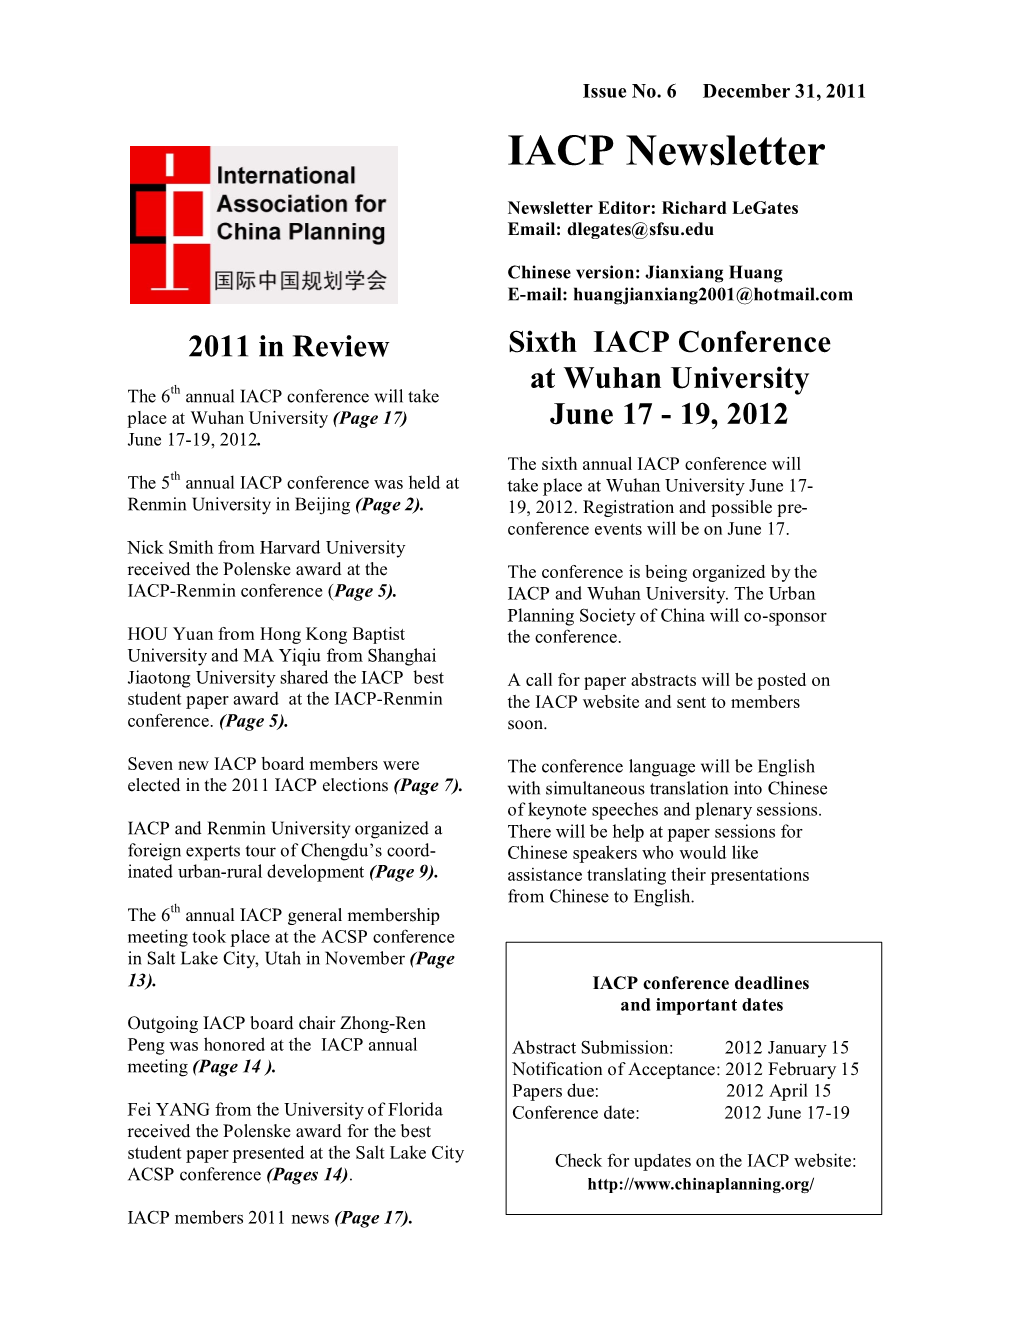 IACP Newsletter